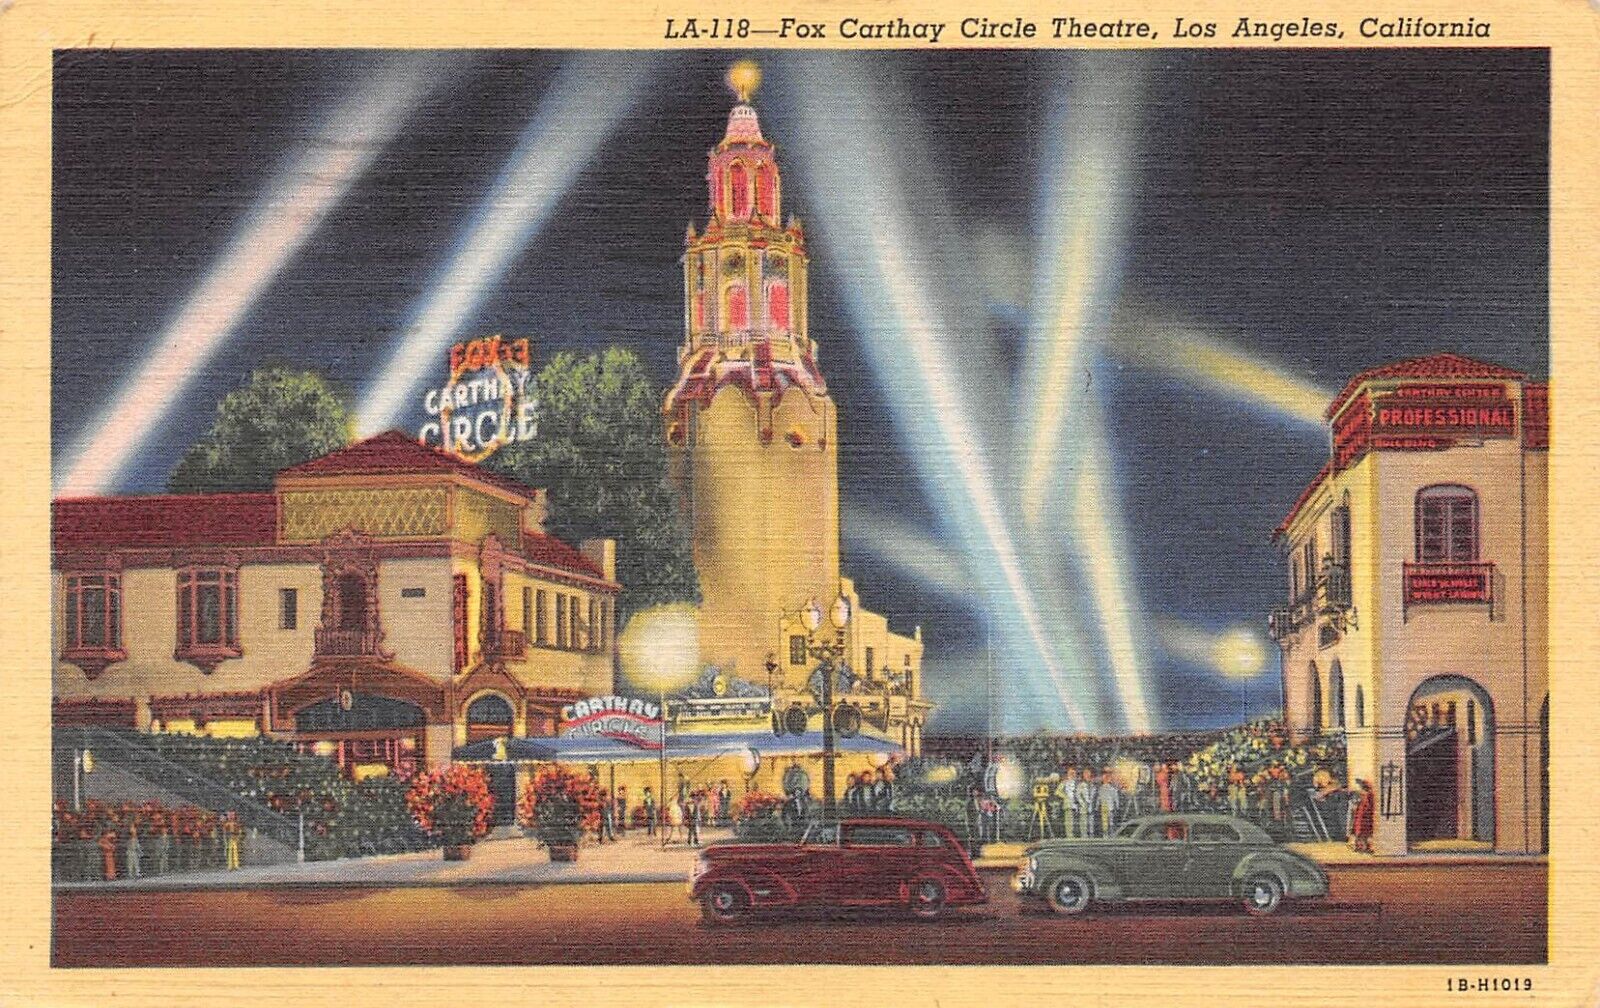 D1865 Fox Carthay Circle Theatre, Los Angeles, CA 1941 Teich Linen PC # 1B-H1019